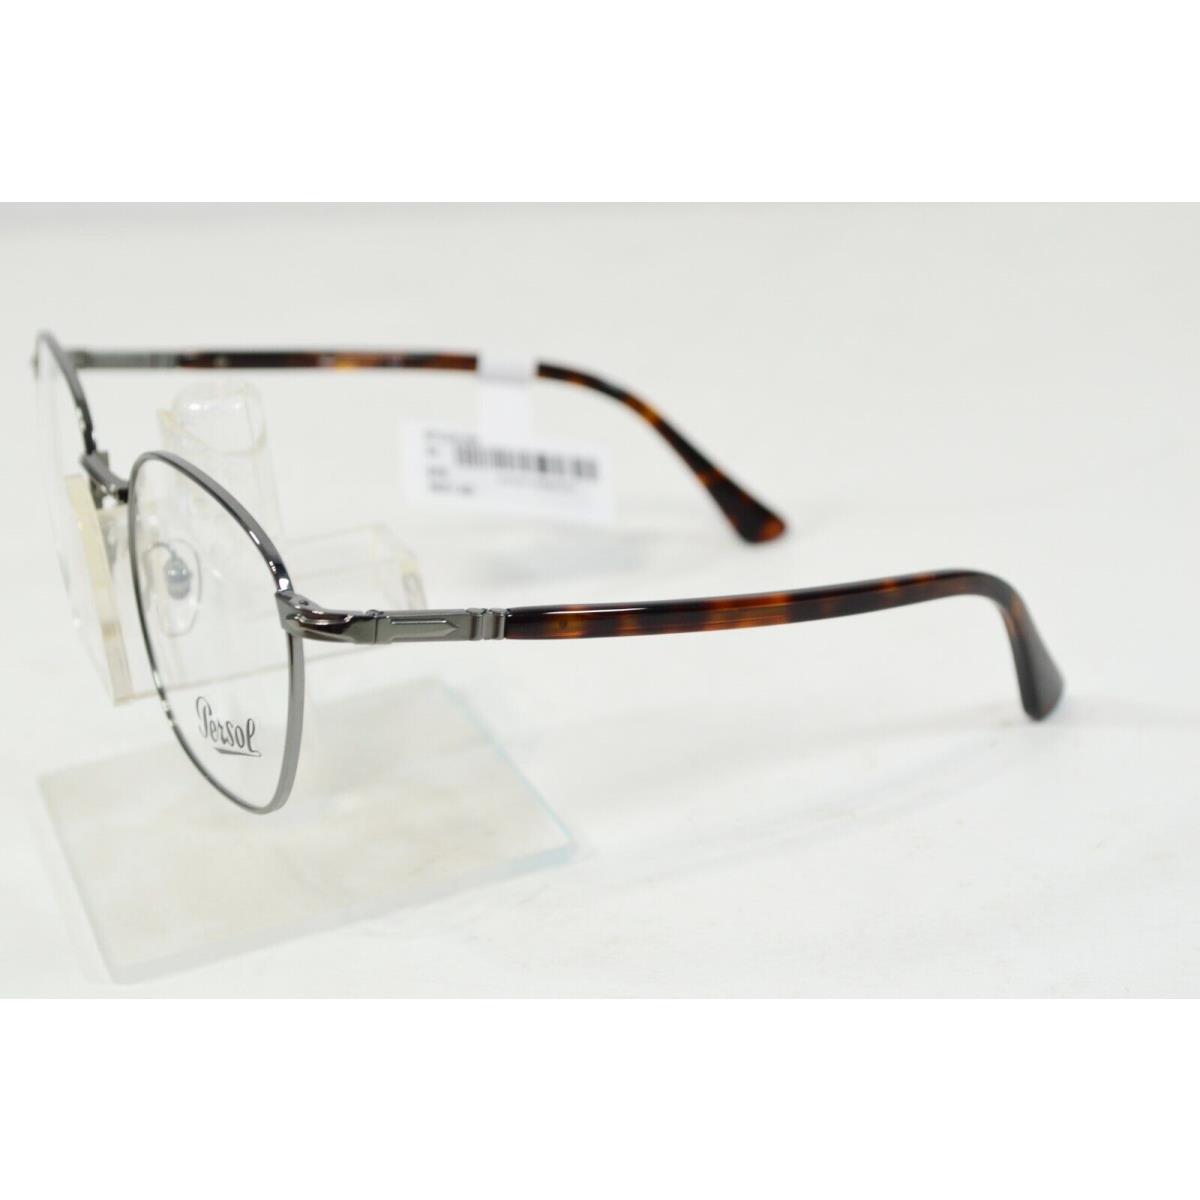 Persol eyeglasses  - Gray Frame 0